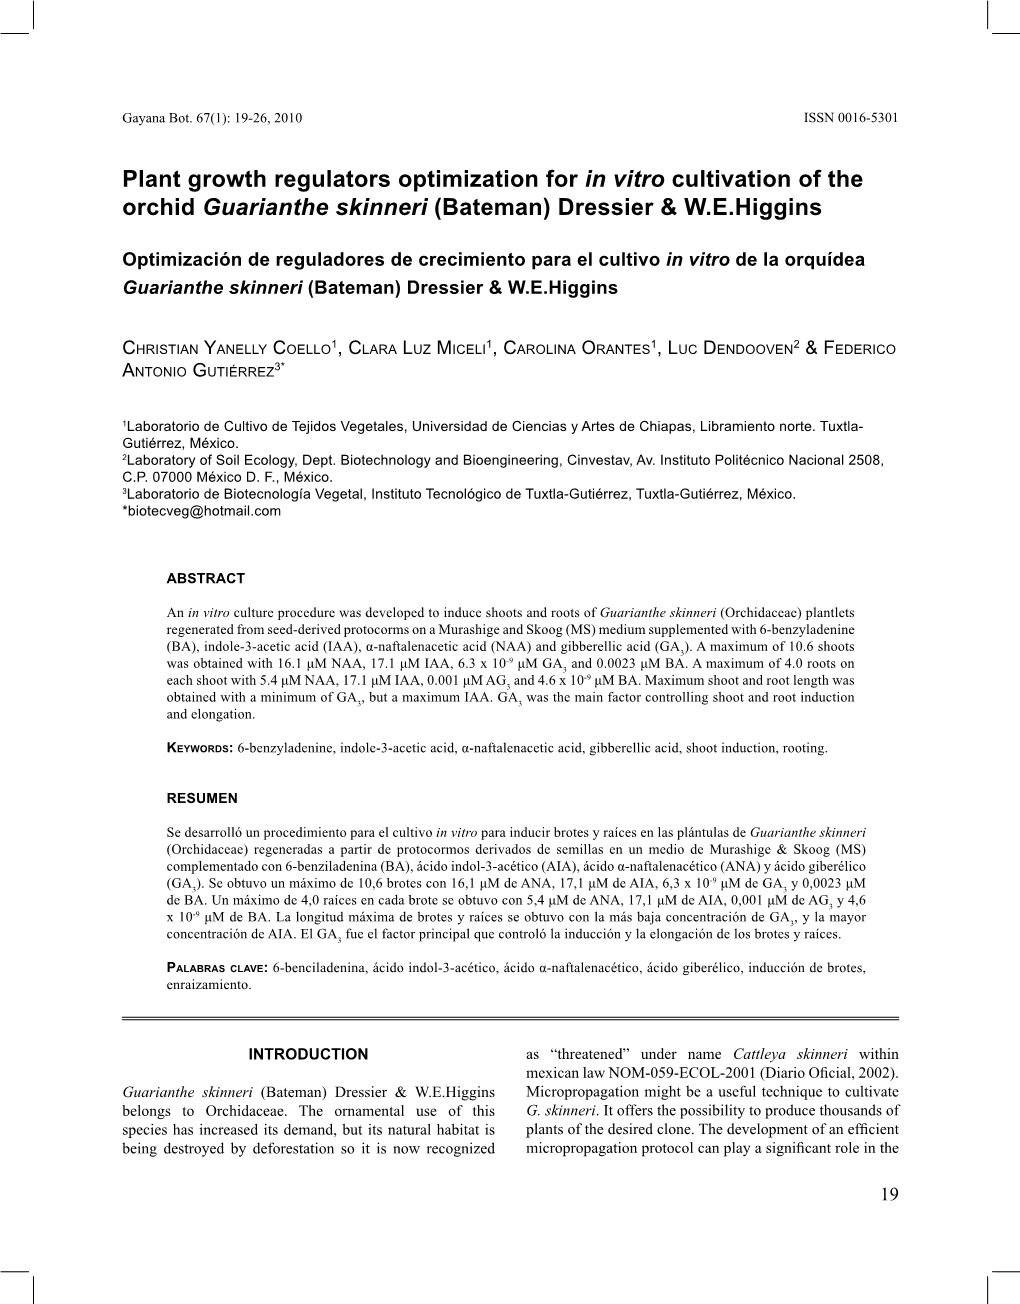 Plant Growth Regulators Optimization for in Vitro Cultivation of the Orchid Guarianthe Skinneri (Bateman) Dressier & W.E.Higgins